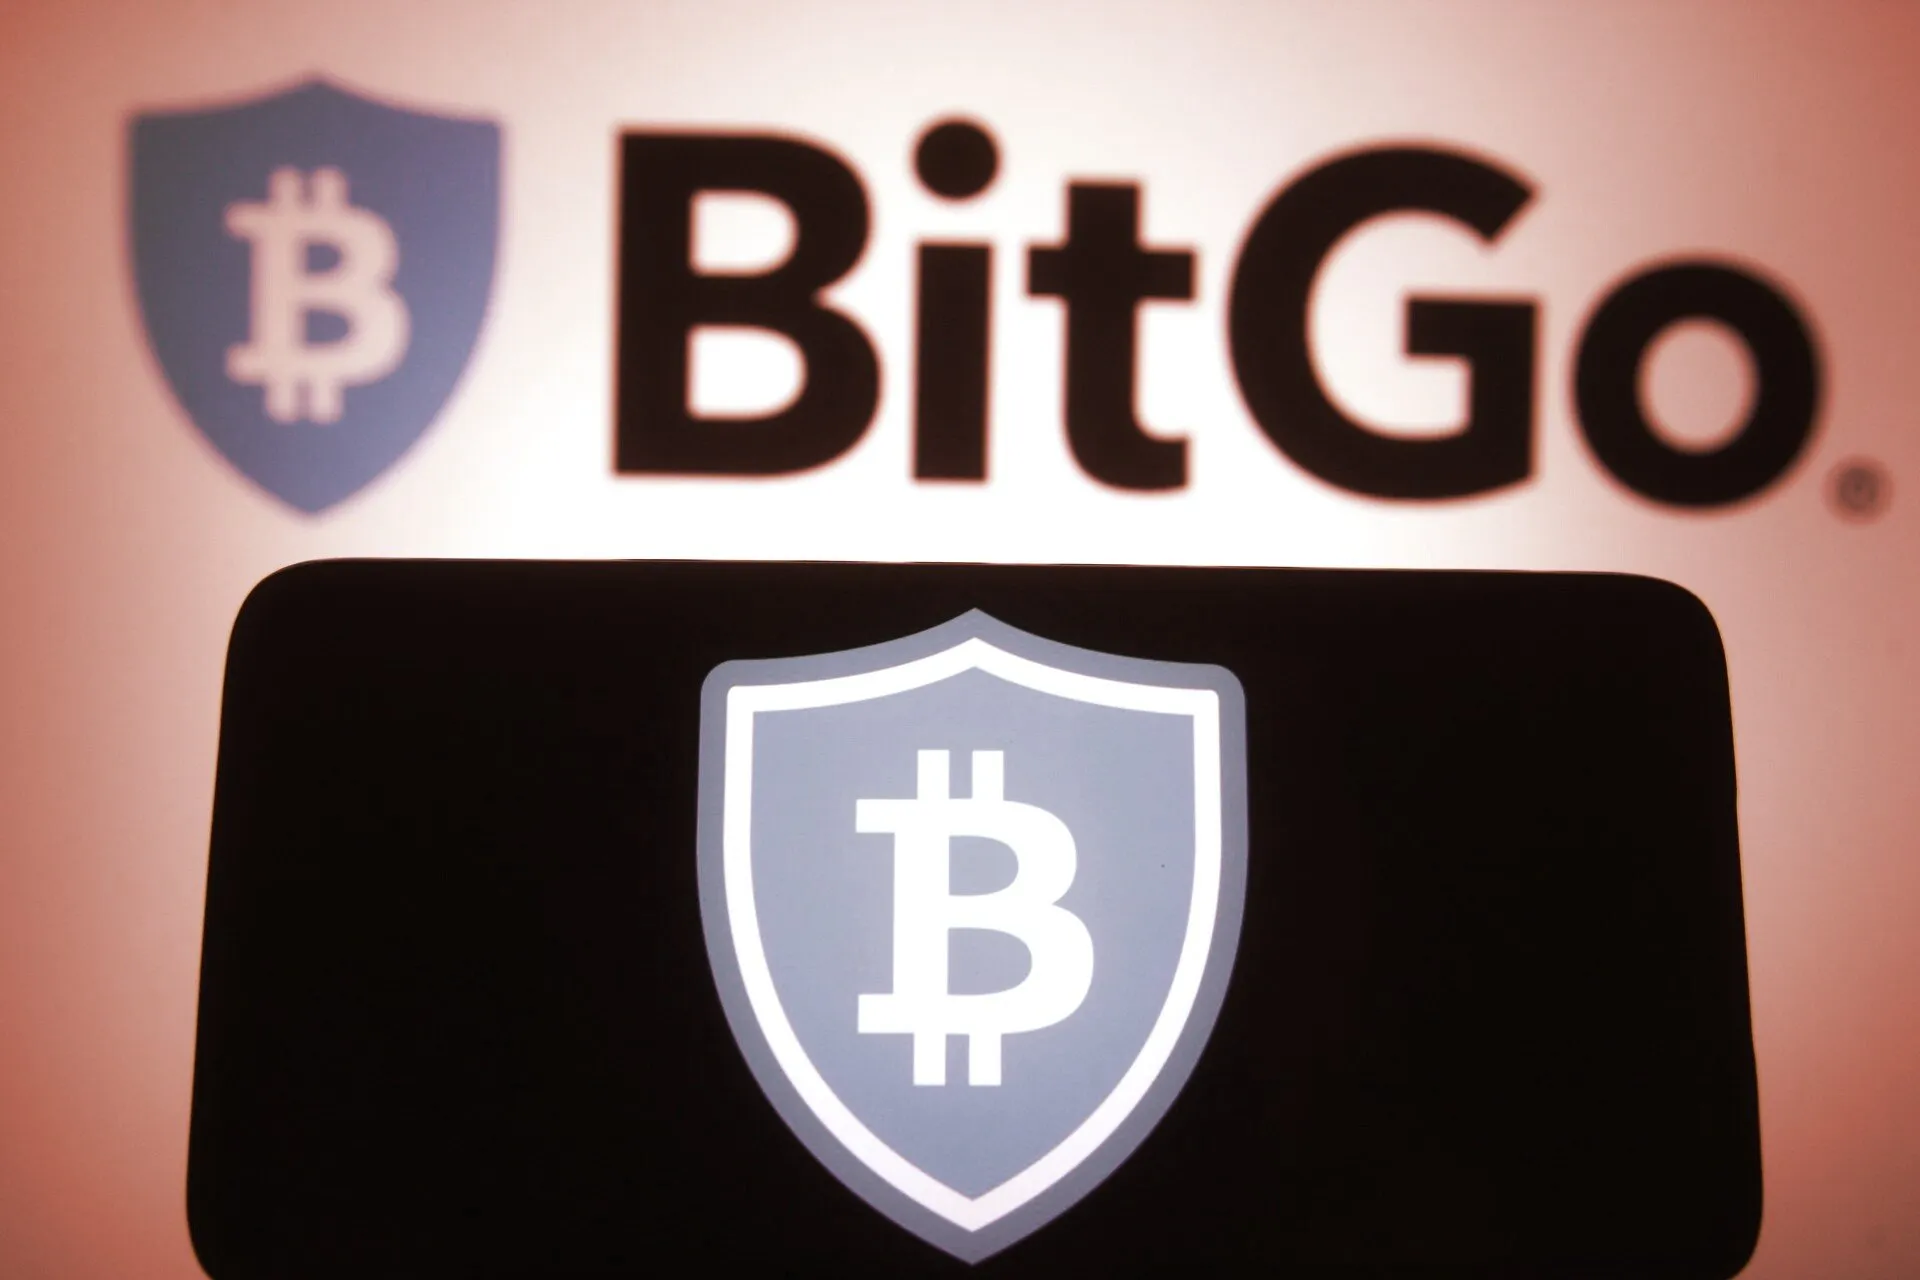 Bitgo will manage seized Bitcoin. Image: Shutterstock.